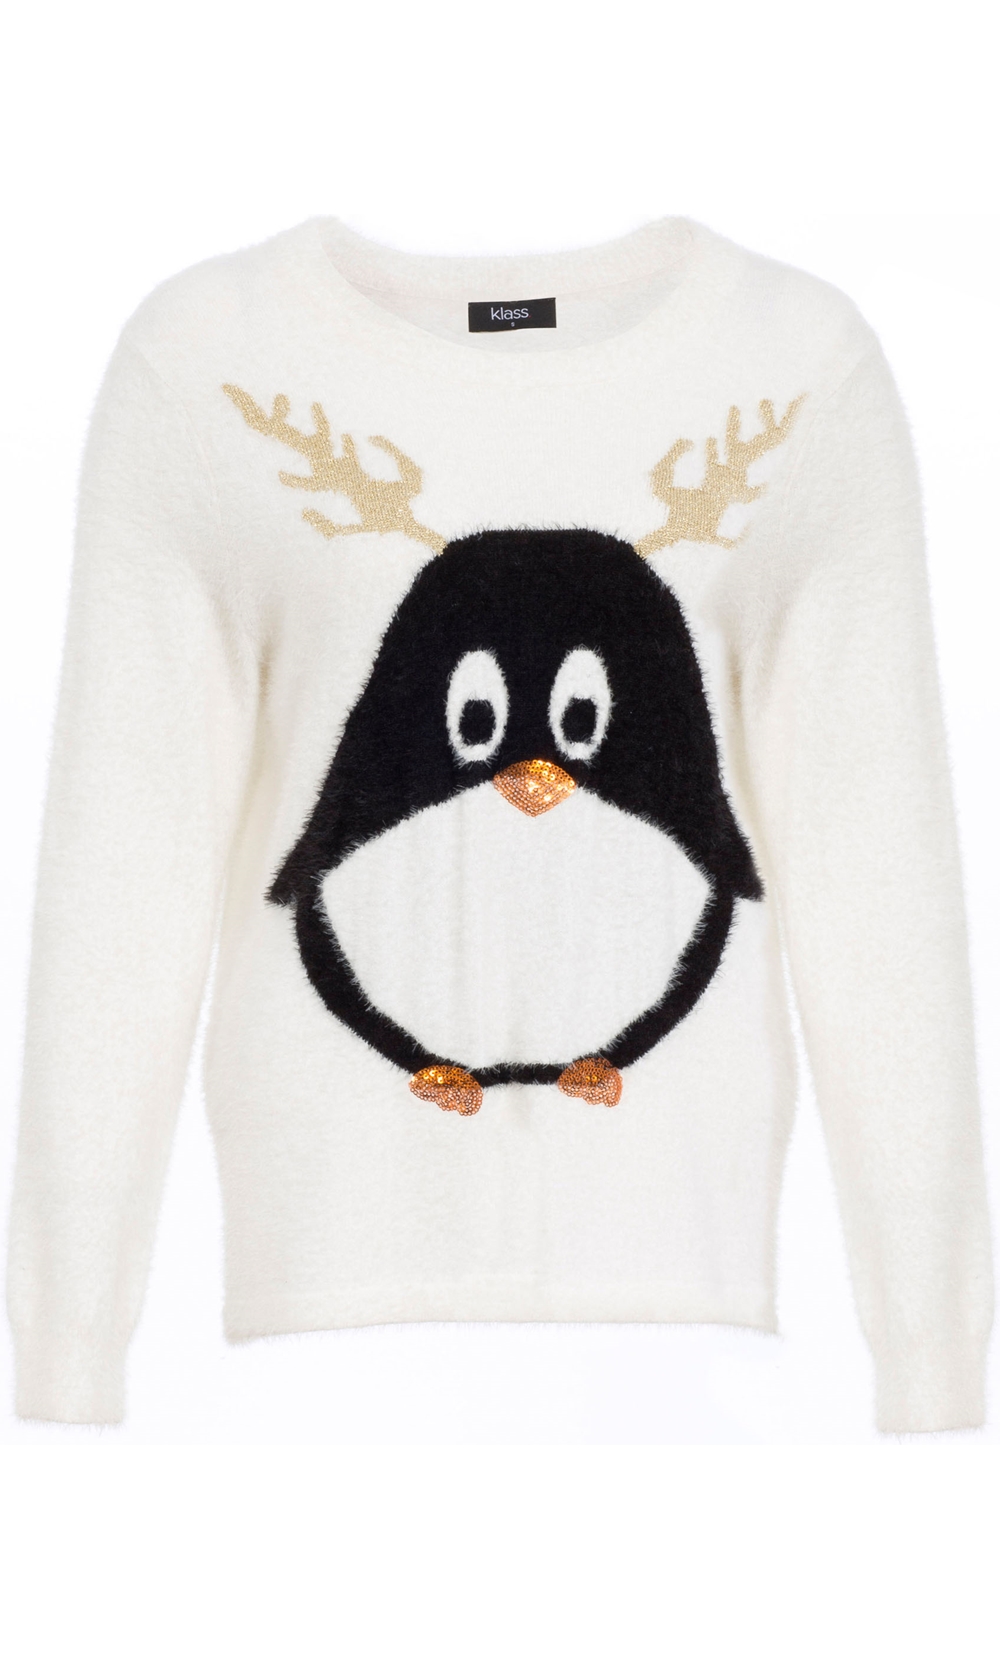 Penguin Design Long Sleeve Knit Top